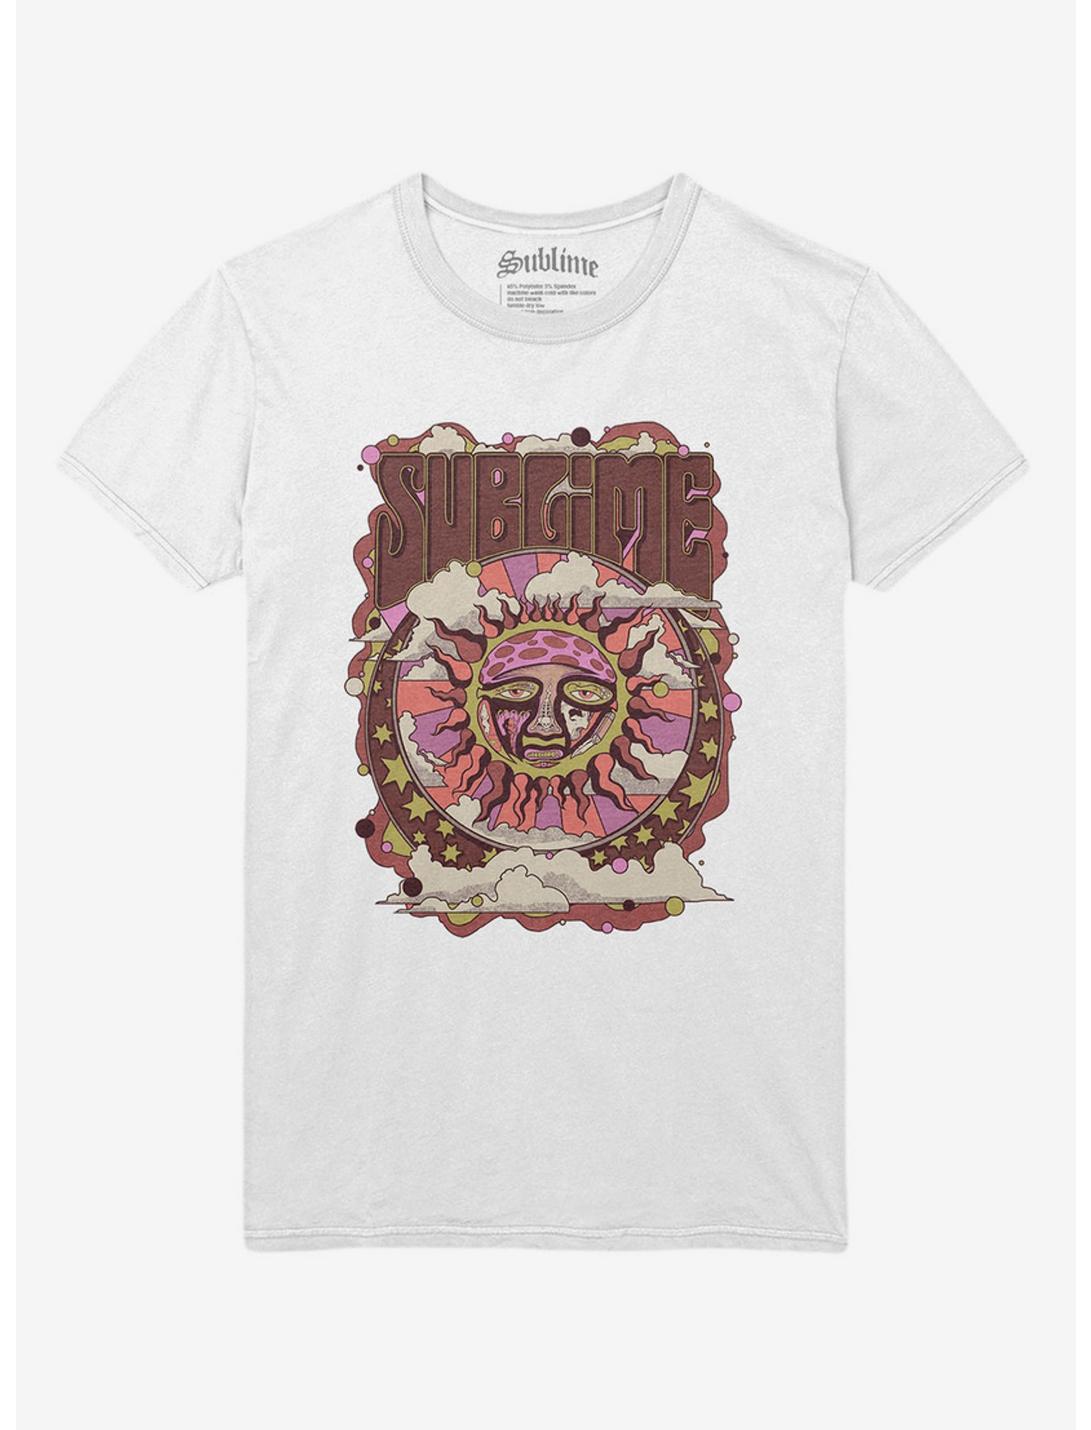 Sublime Sun Logo Girls T-Shirt, CREAM, hi-res